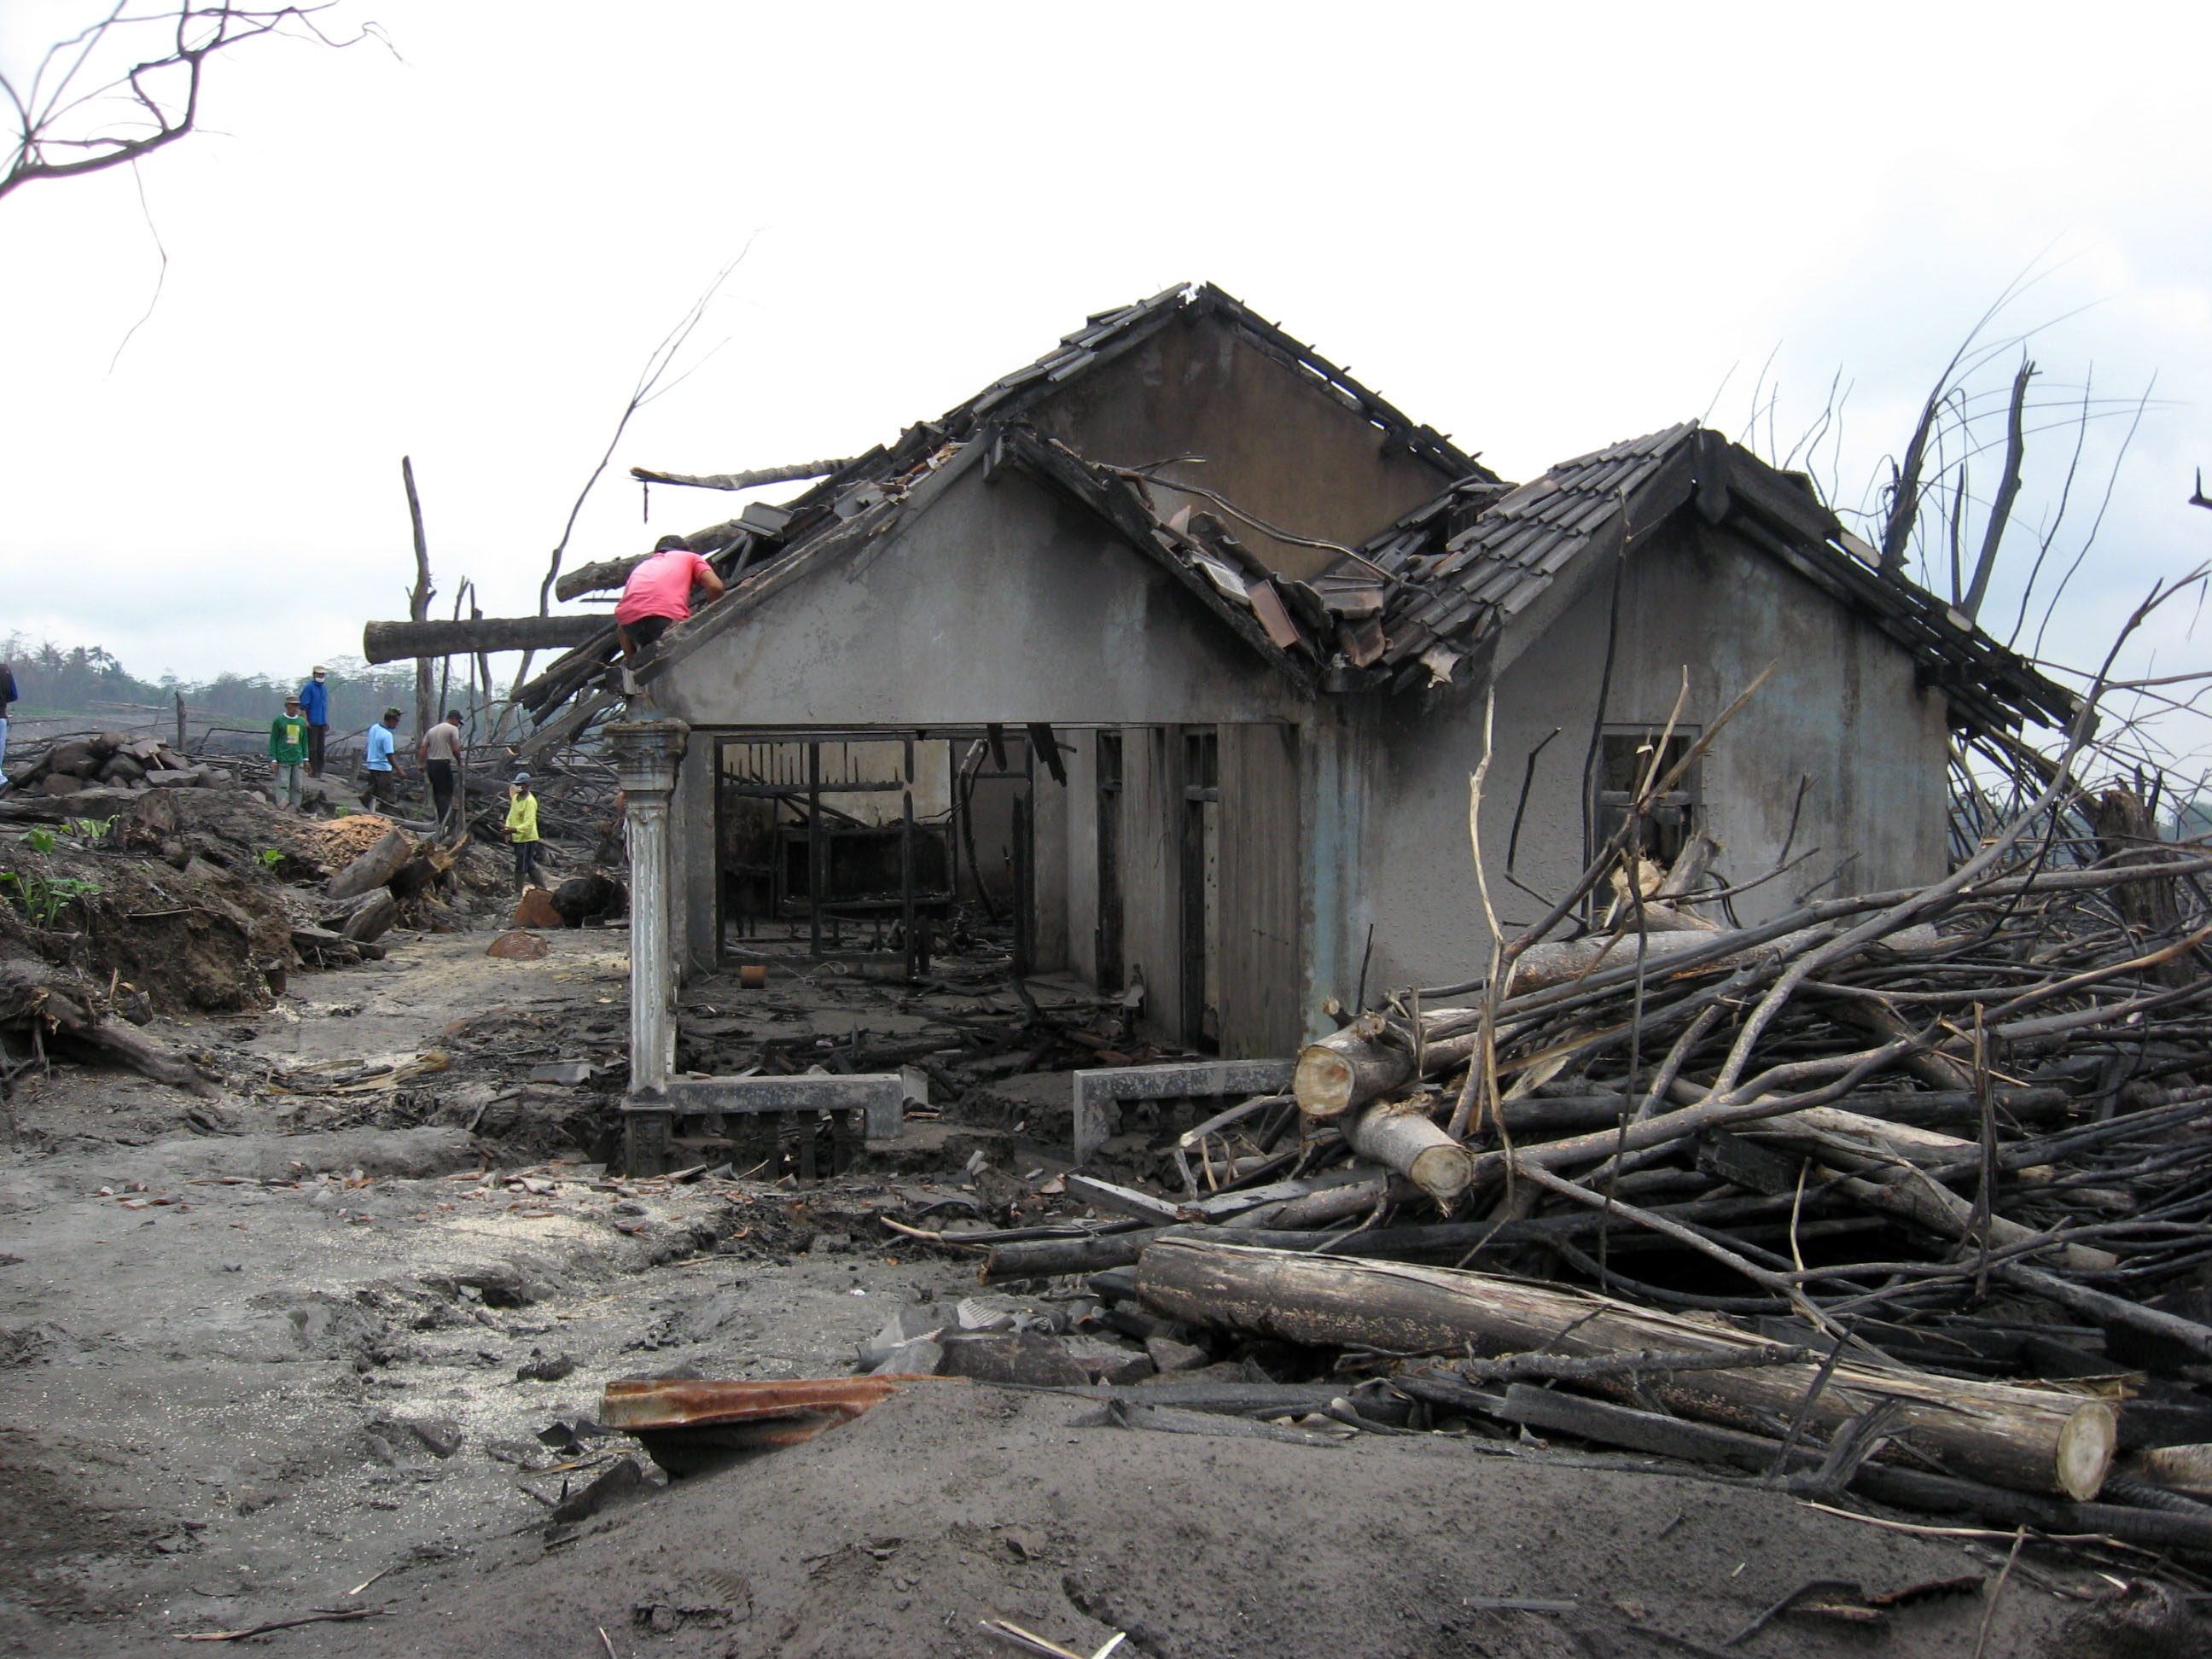 Destroyed_house_in_Cangkringan_Village_after_the_2010_Eruptions_of_Mount_Merapi.jpg